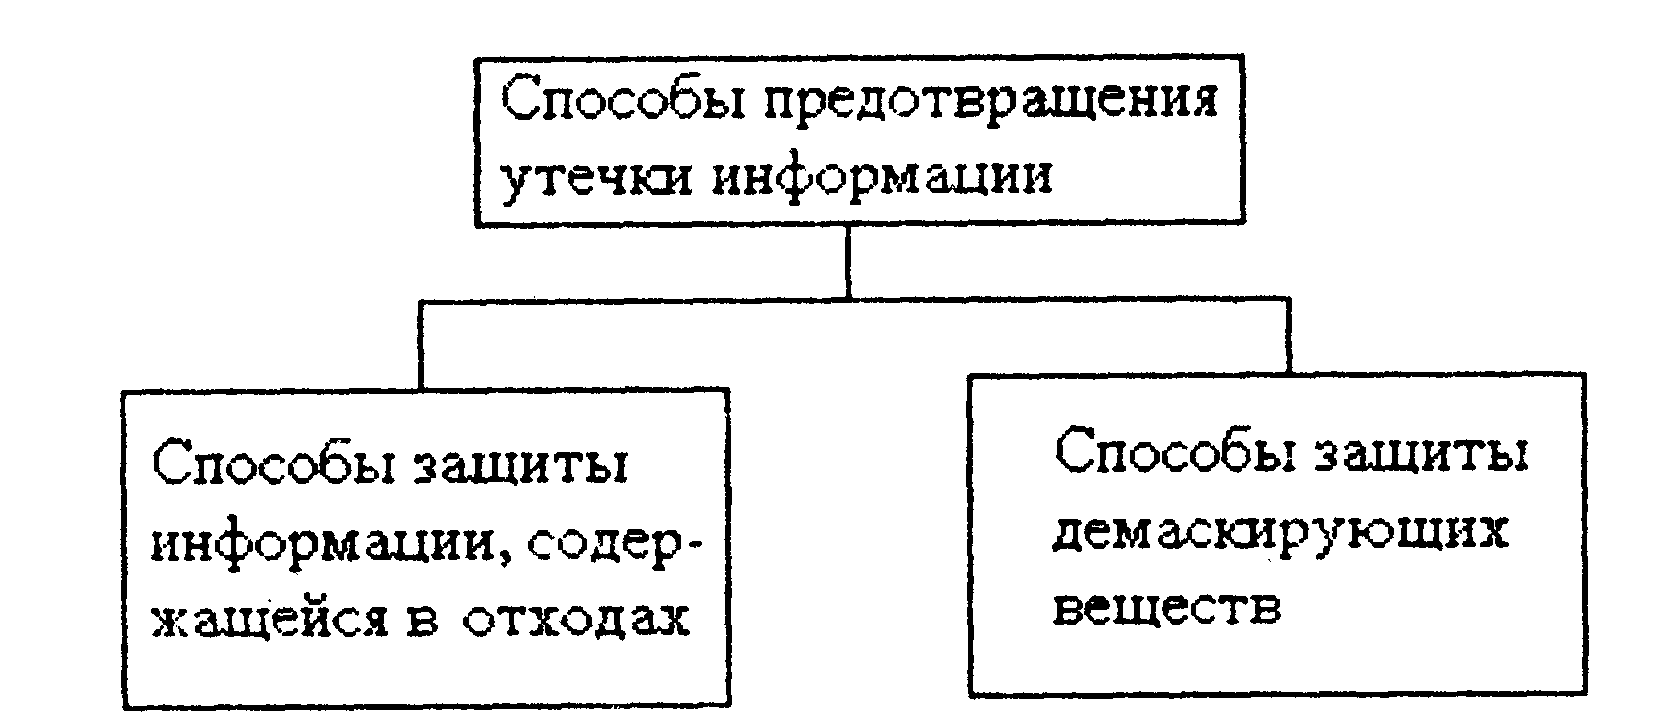 http://znanie.podelise.ru/tw_files2/urls_967/2/d-1937/1937_html_m28e03258.png